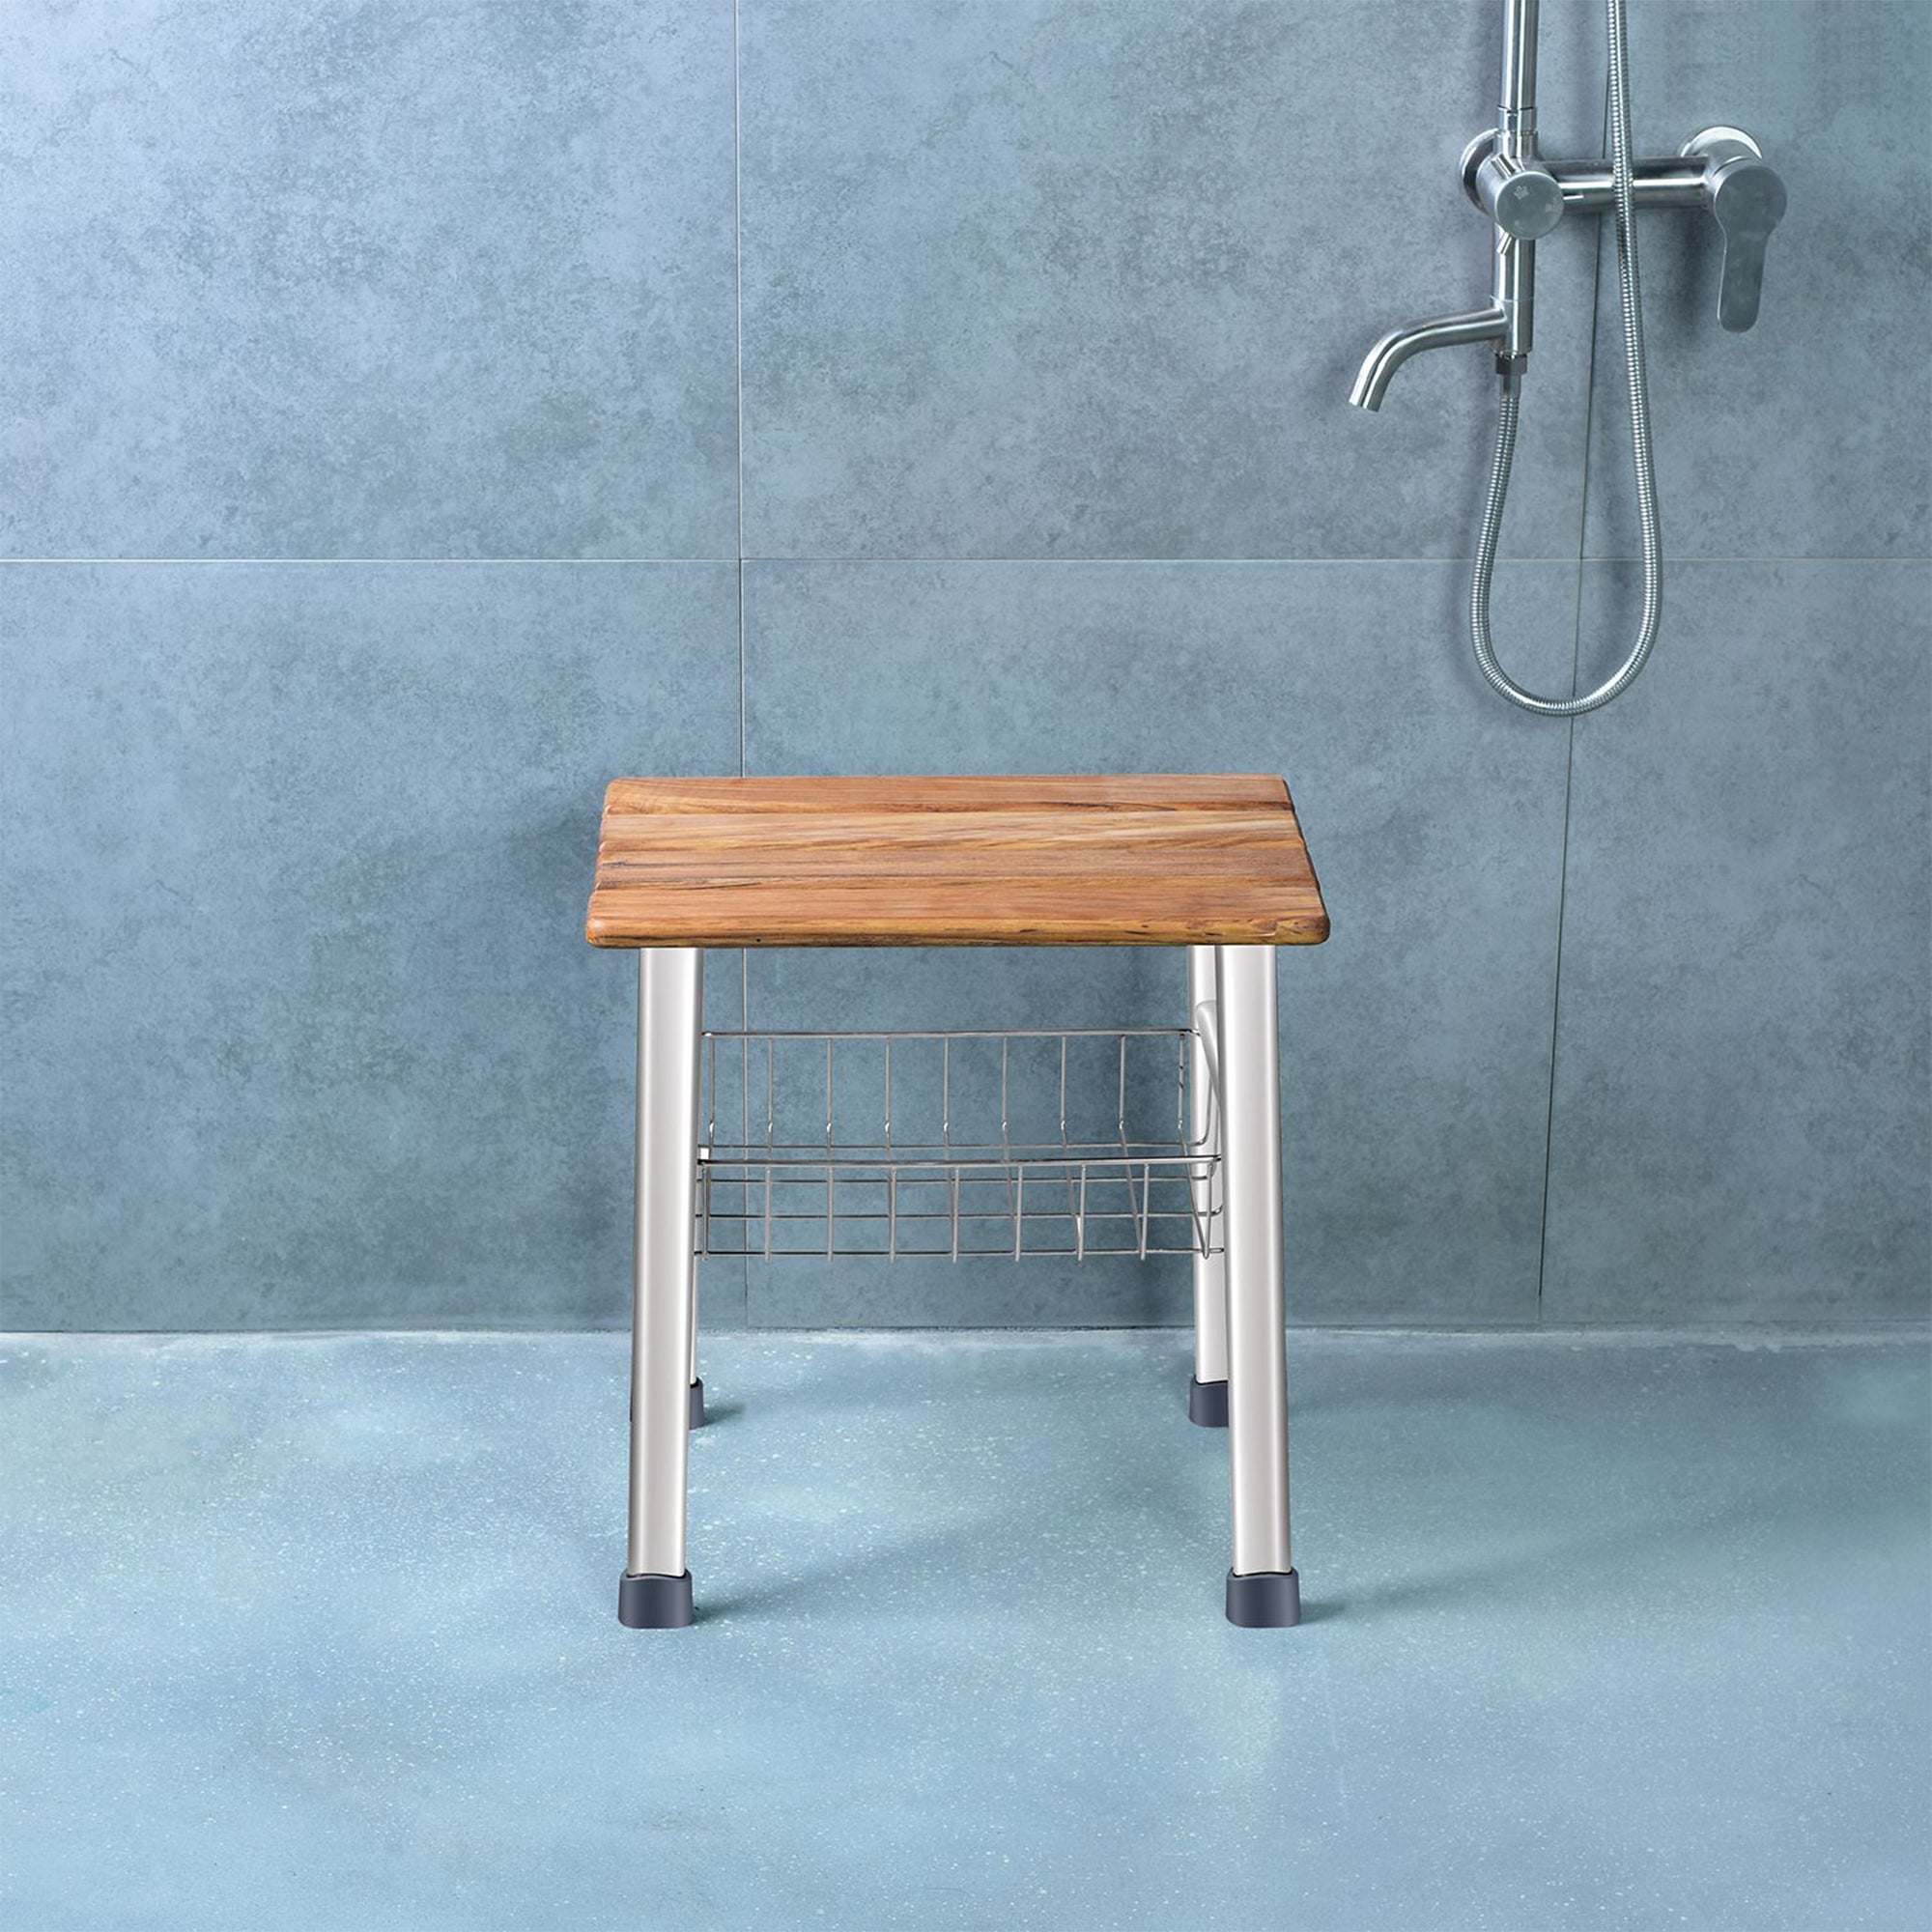 ToiletTree Products Deluxe Bathroom Teak & Stainless Steel Shower Seat Organizer